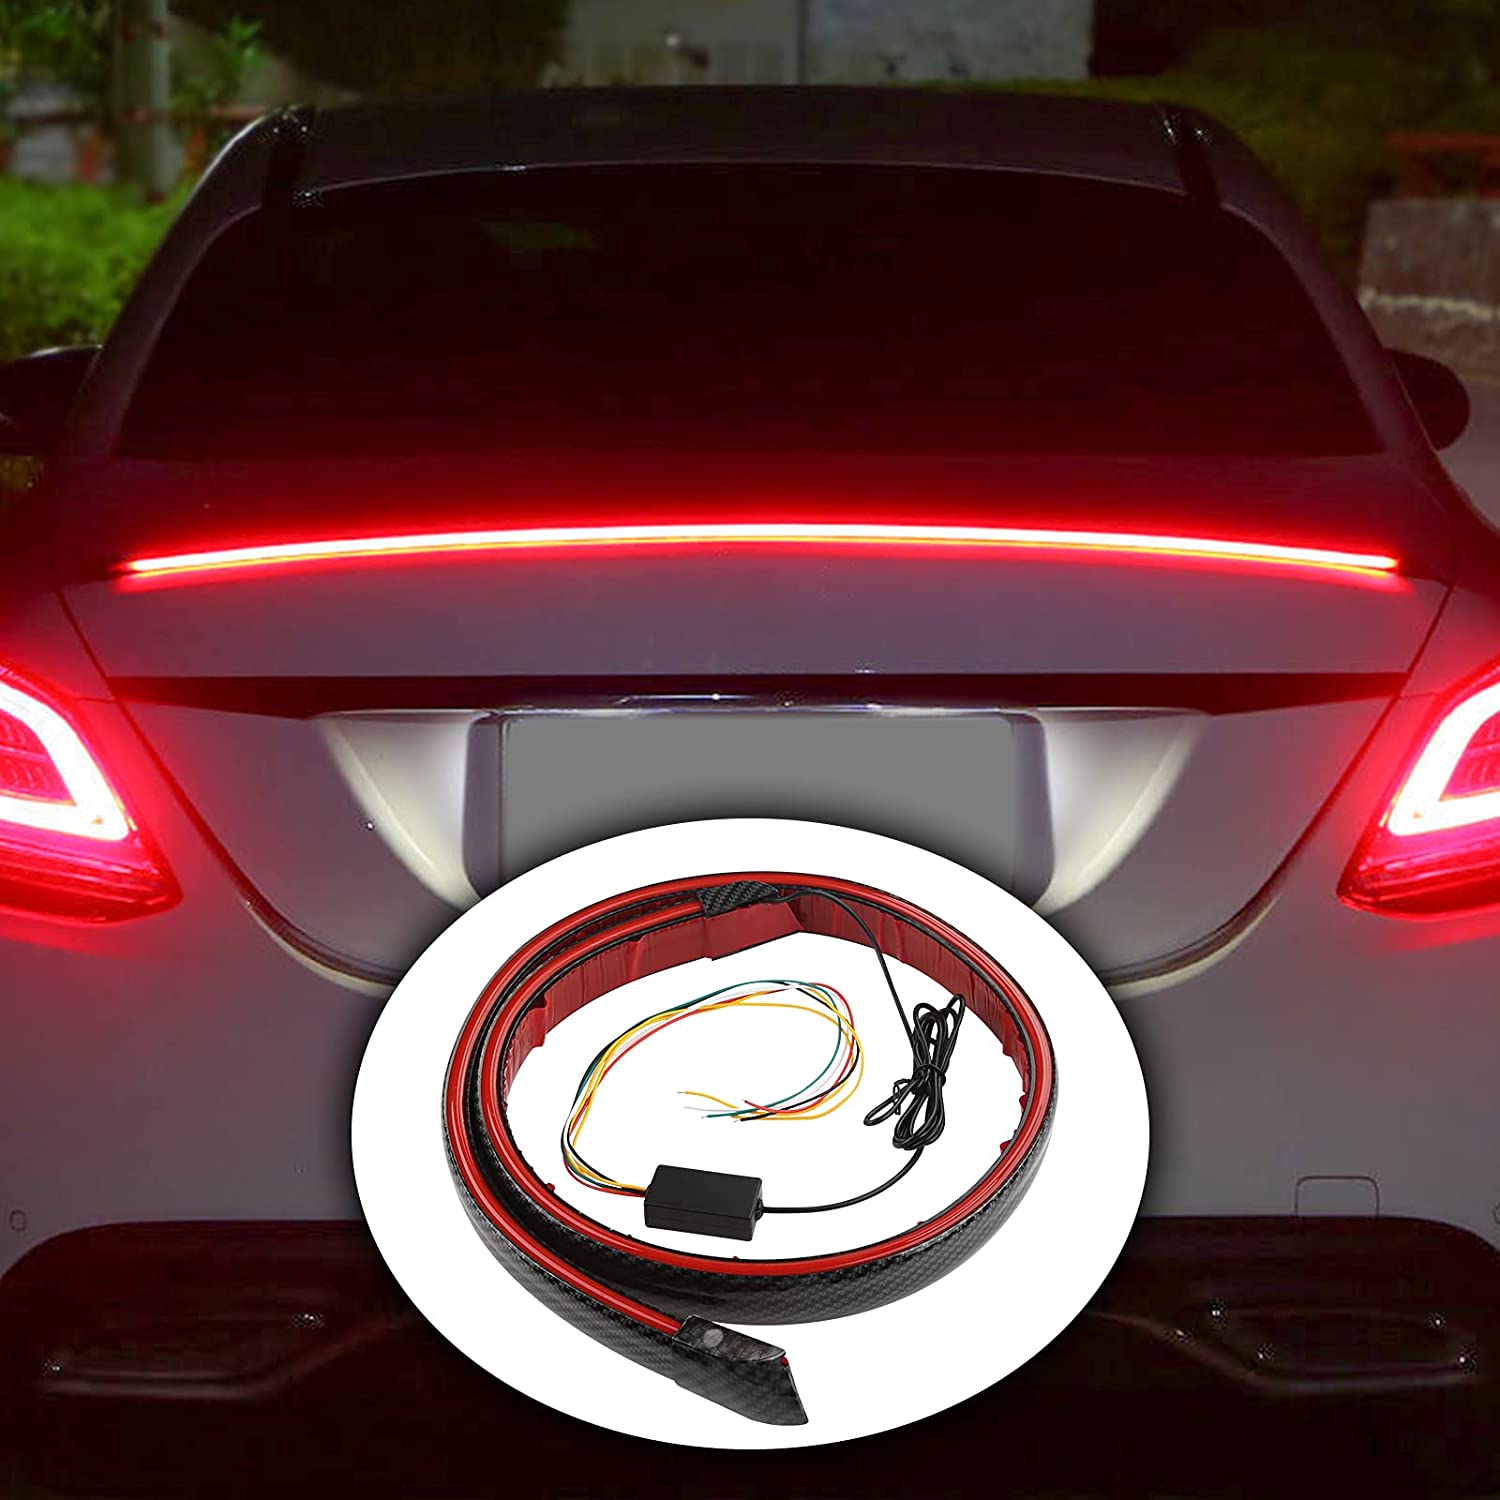 Car Spoiler Light -LED Car Tail Brake Light/Turn Signal Indicator/DRL Universal Car/Jeepcompus Rear Exterior Strip Trunk Light Multicolor Changing (Carbon Fiber) 54inch